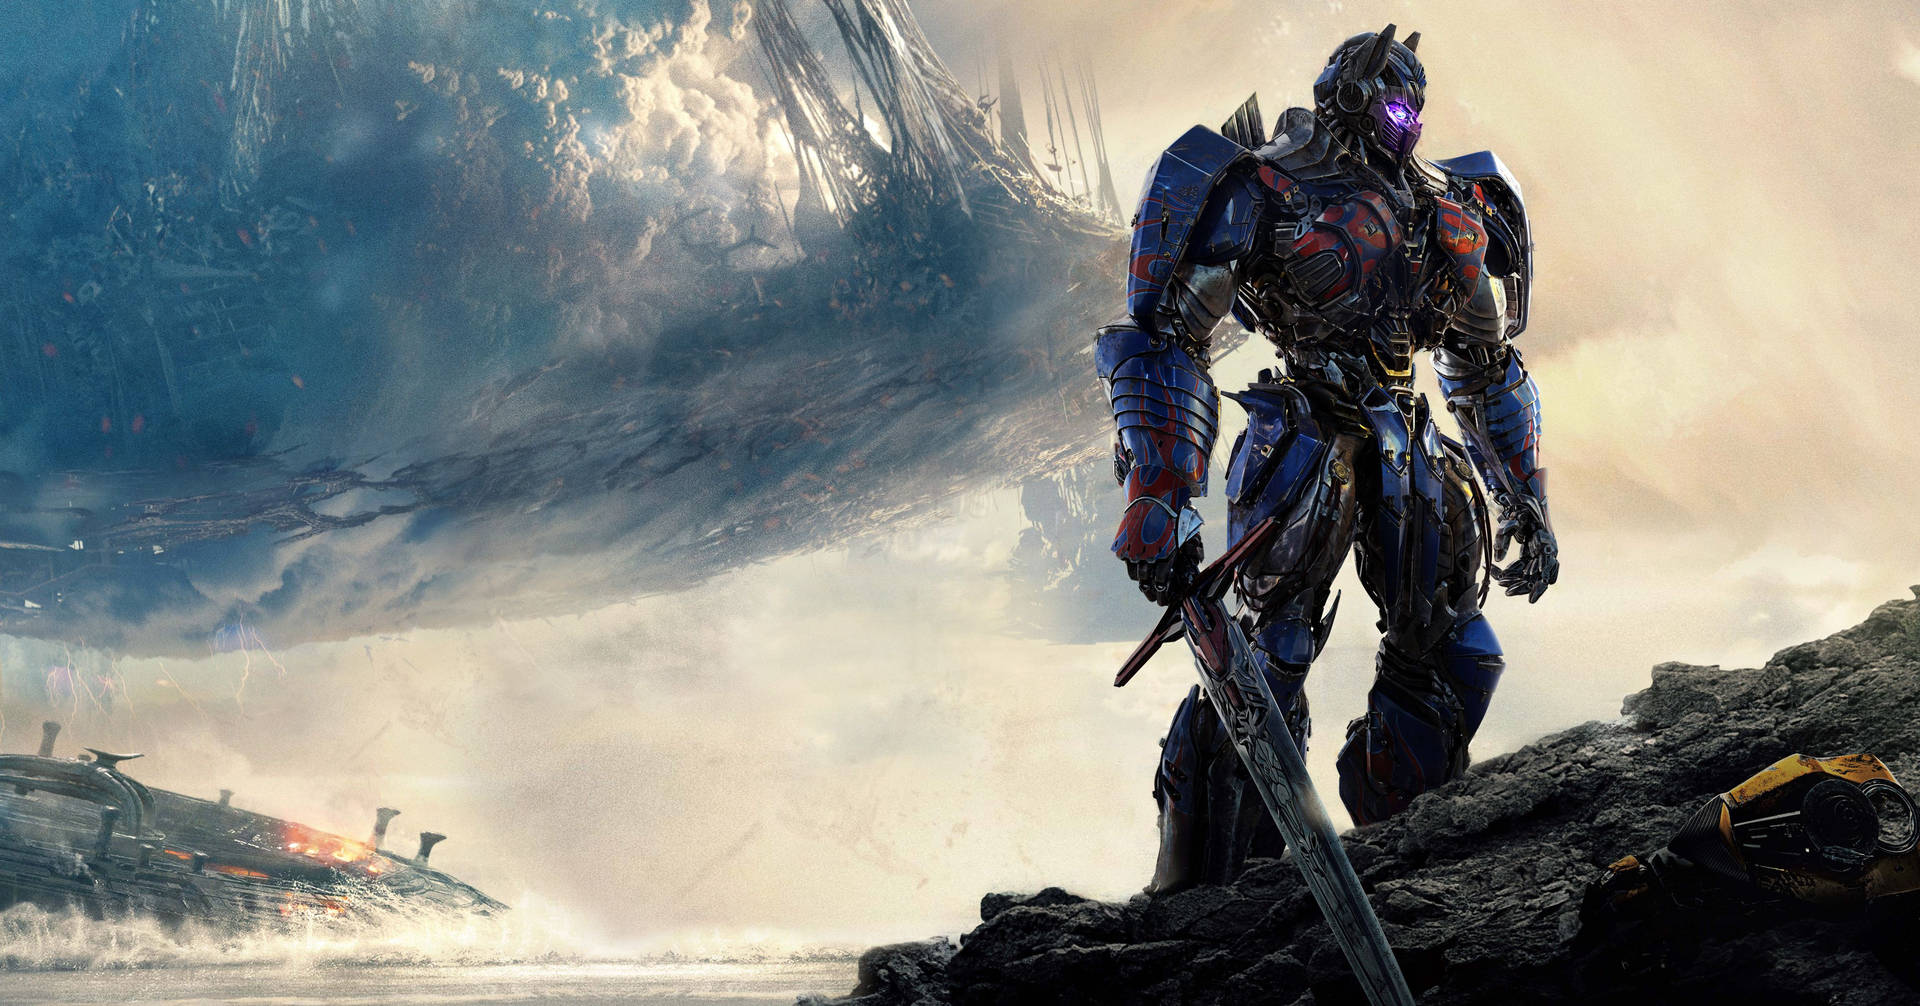 Transformers: The Last Knight Wallpaper